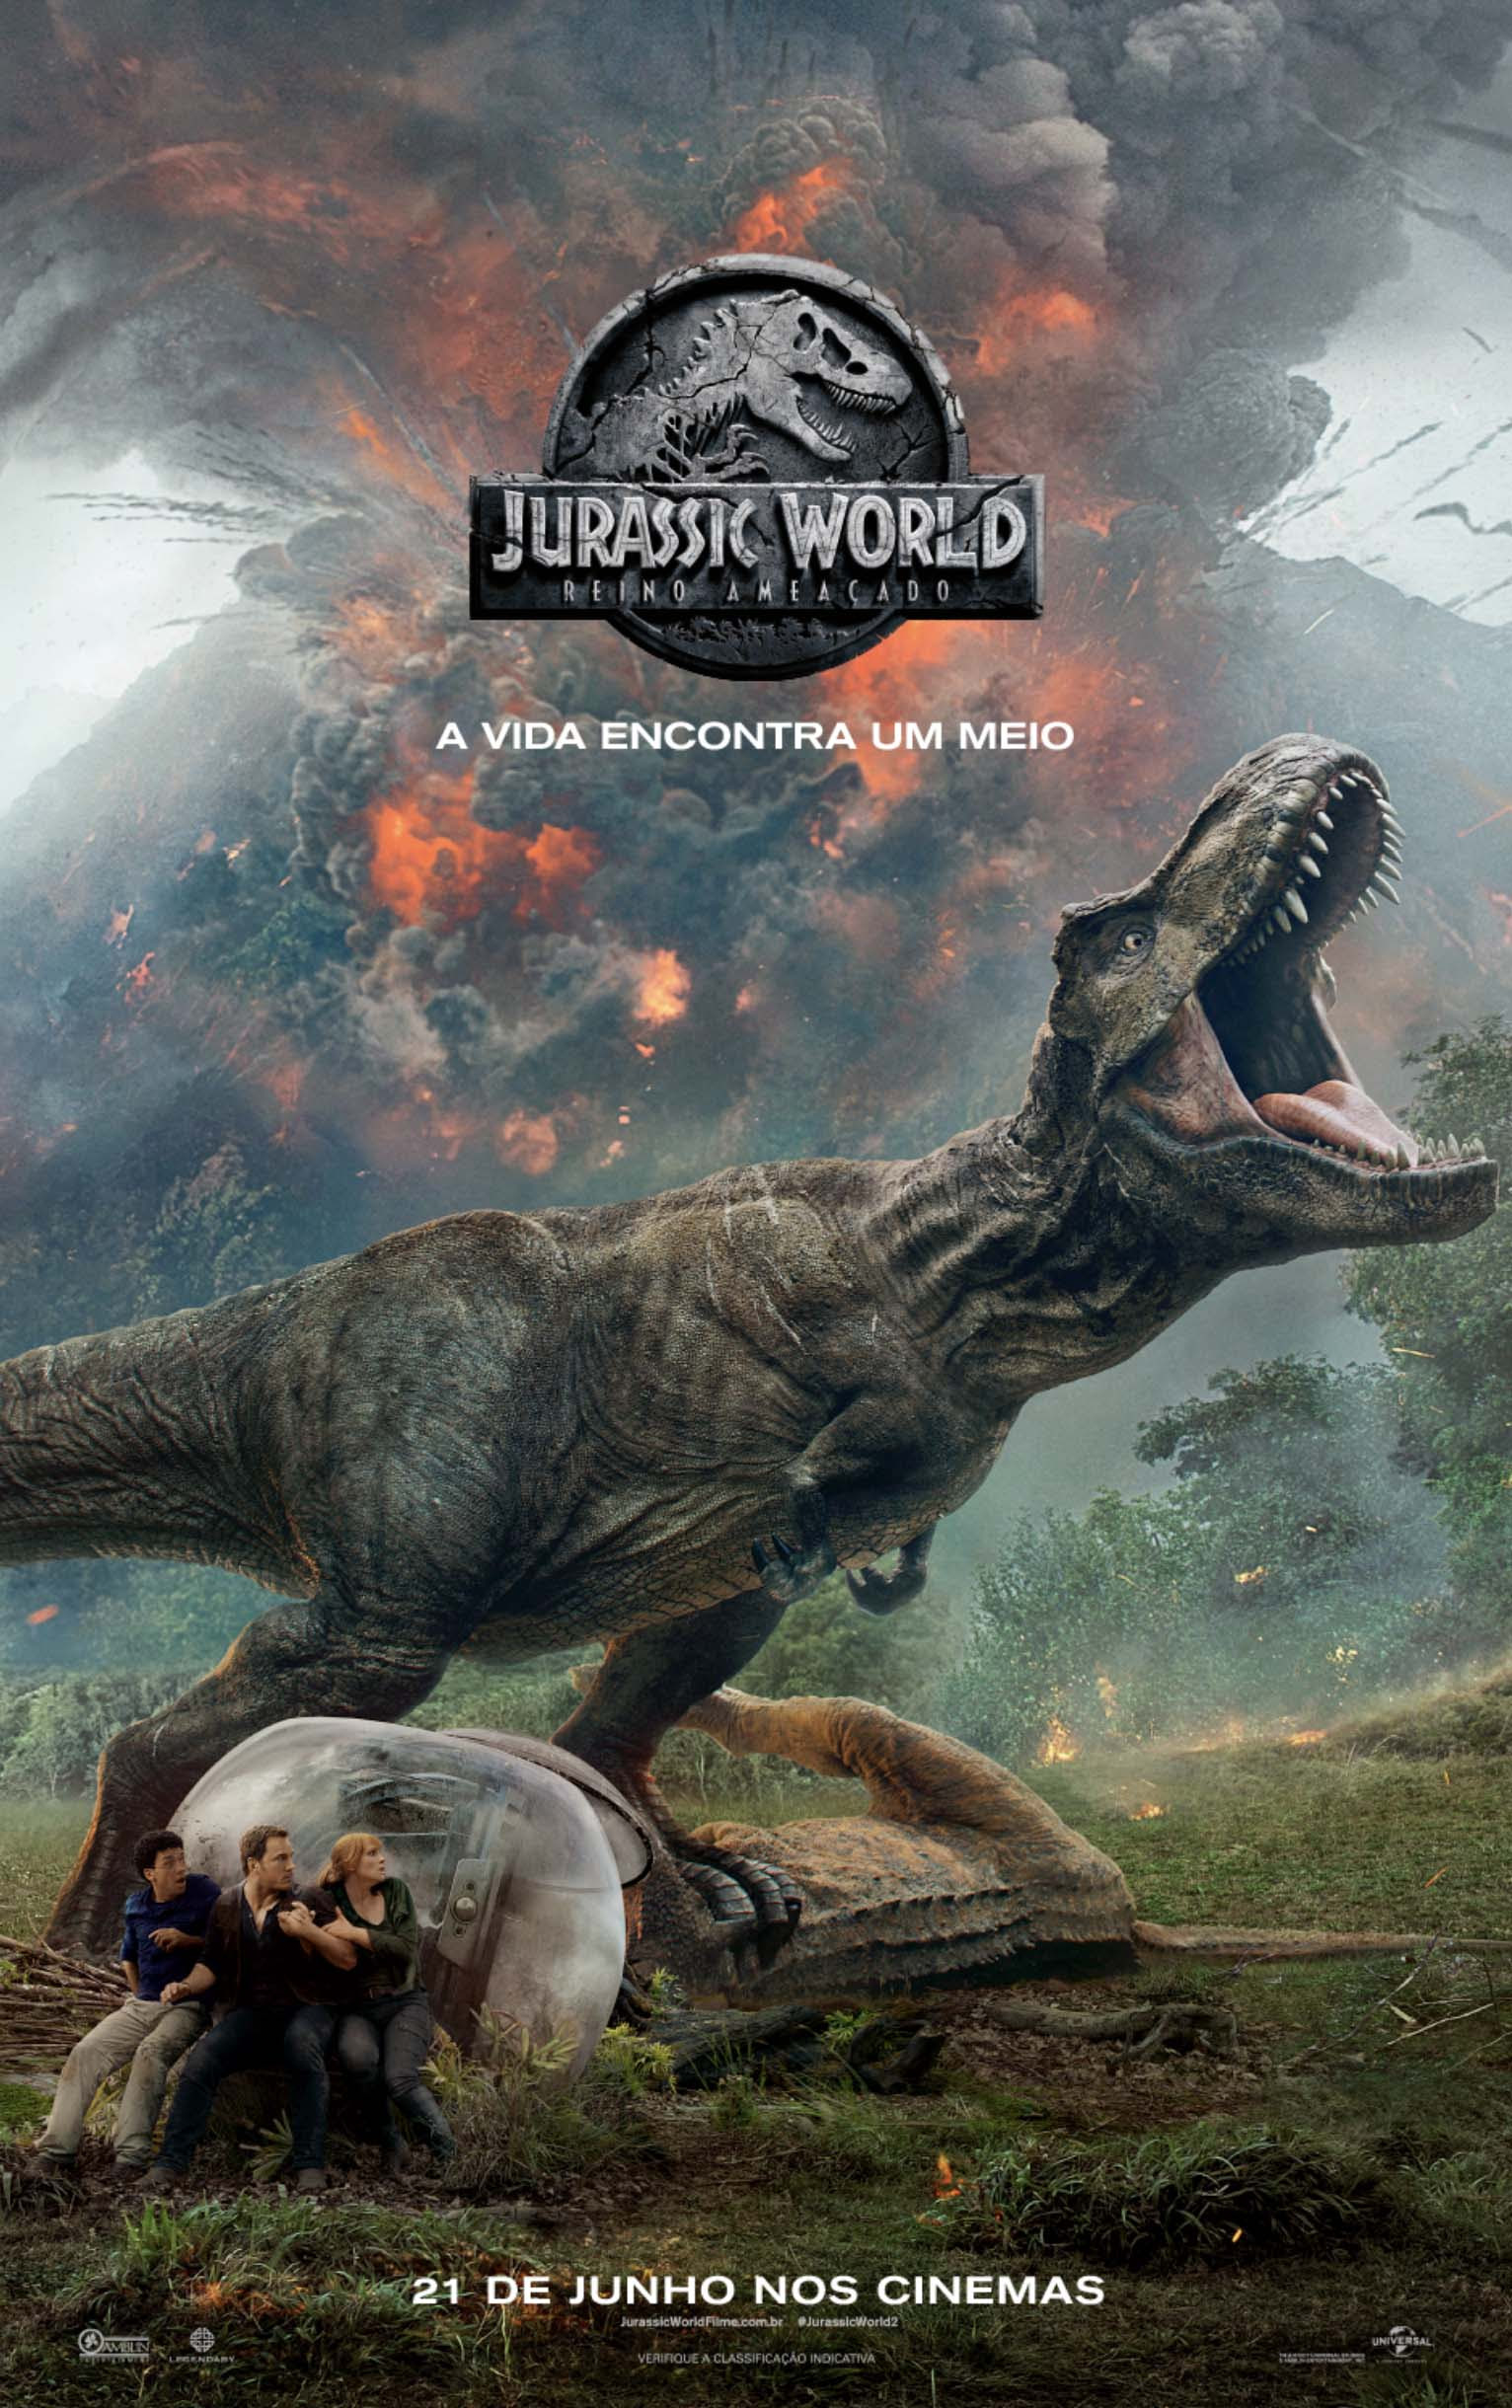 Jurassic World - Reino ameaçado 